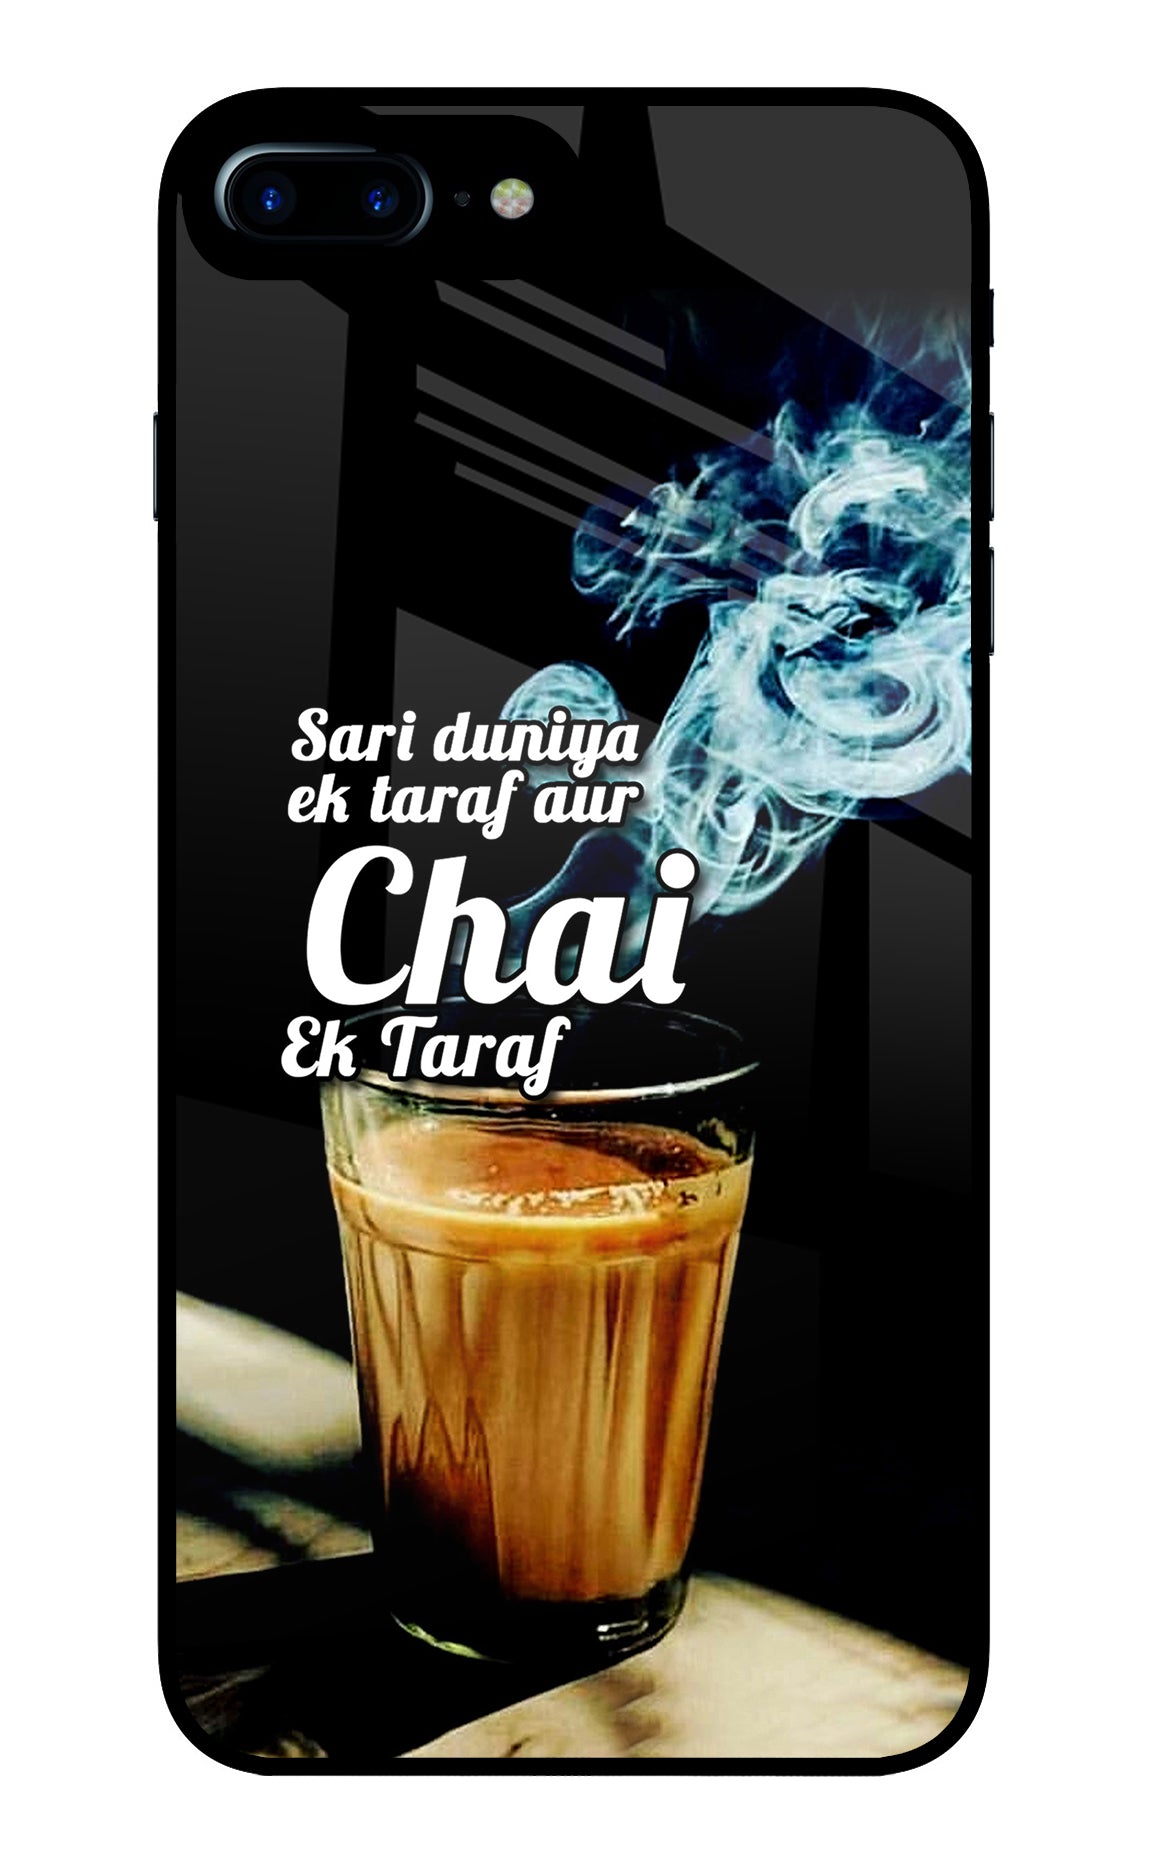 Chai Ek Taraf Quote iPhone 8 Plus Glass Case